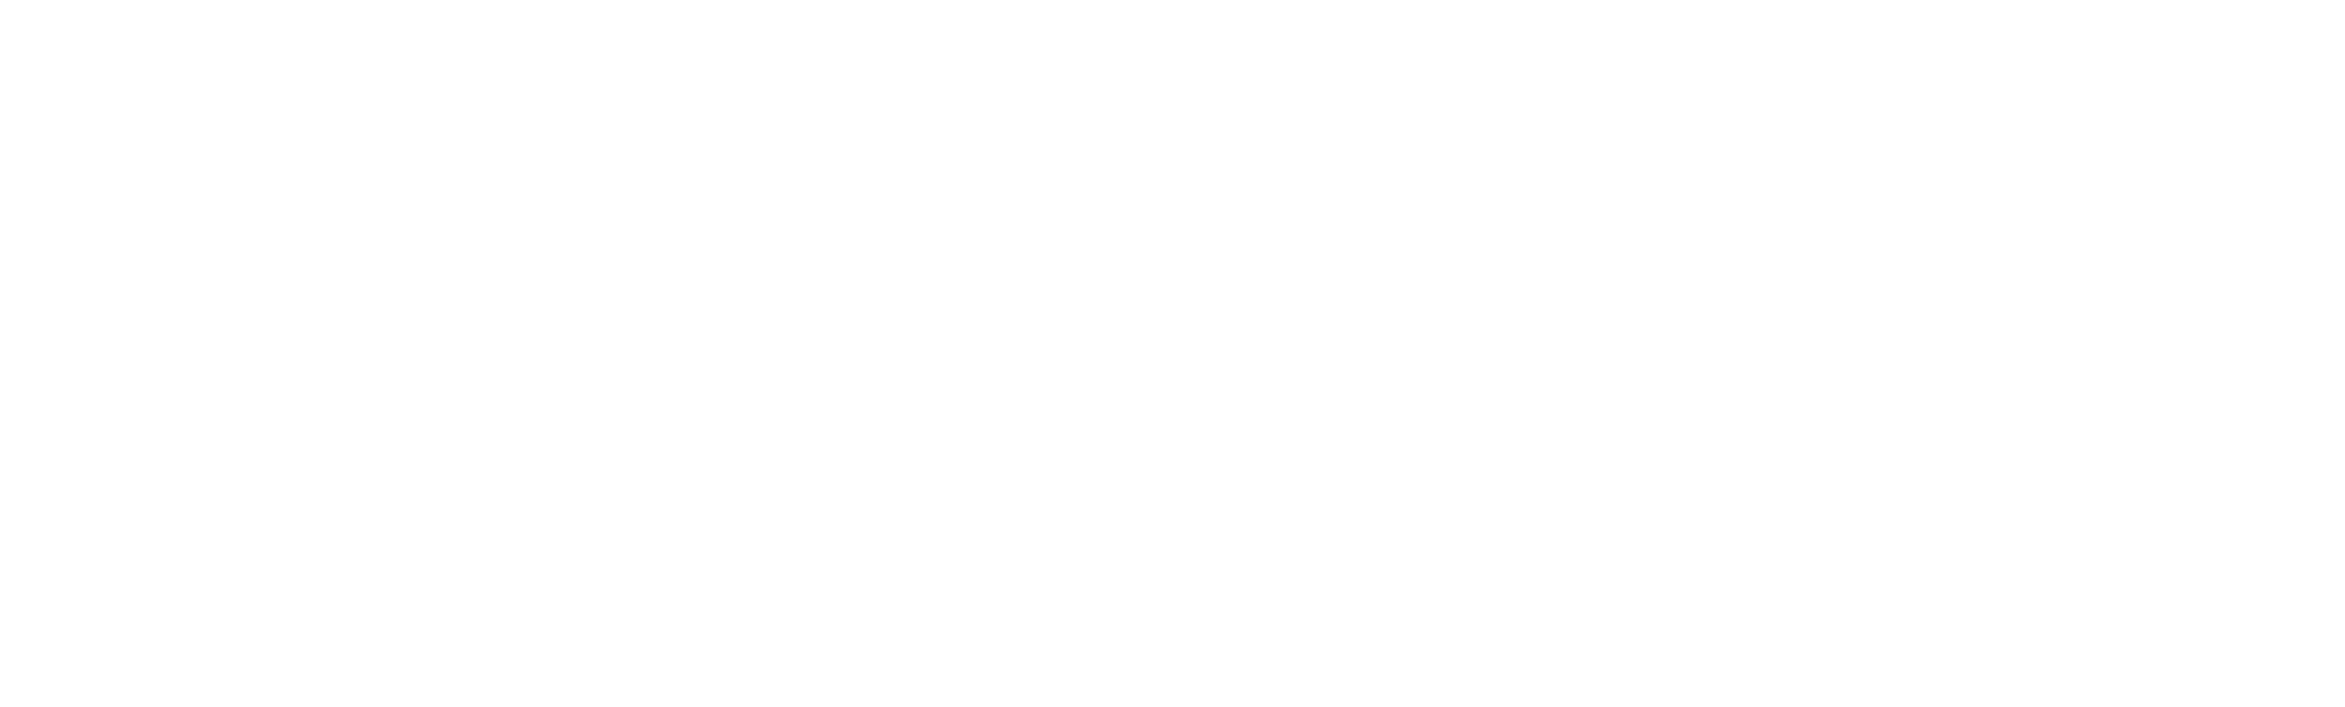 Presspage Logo Home